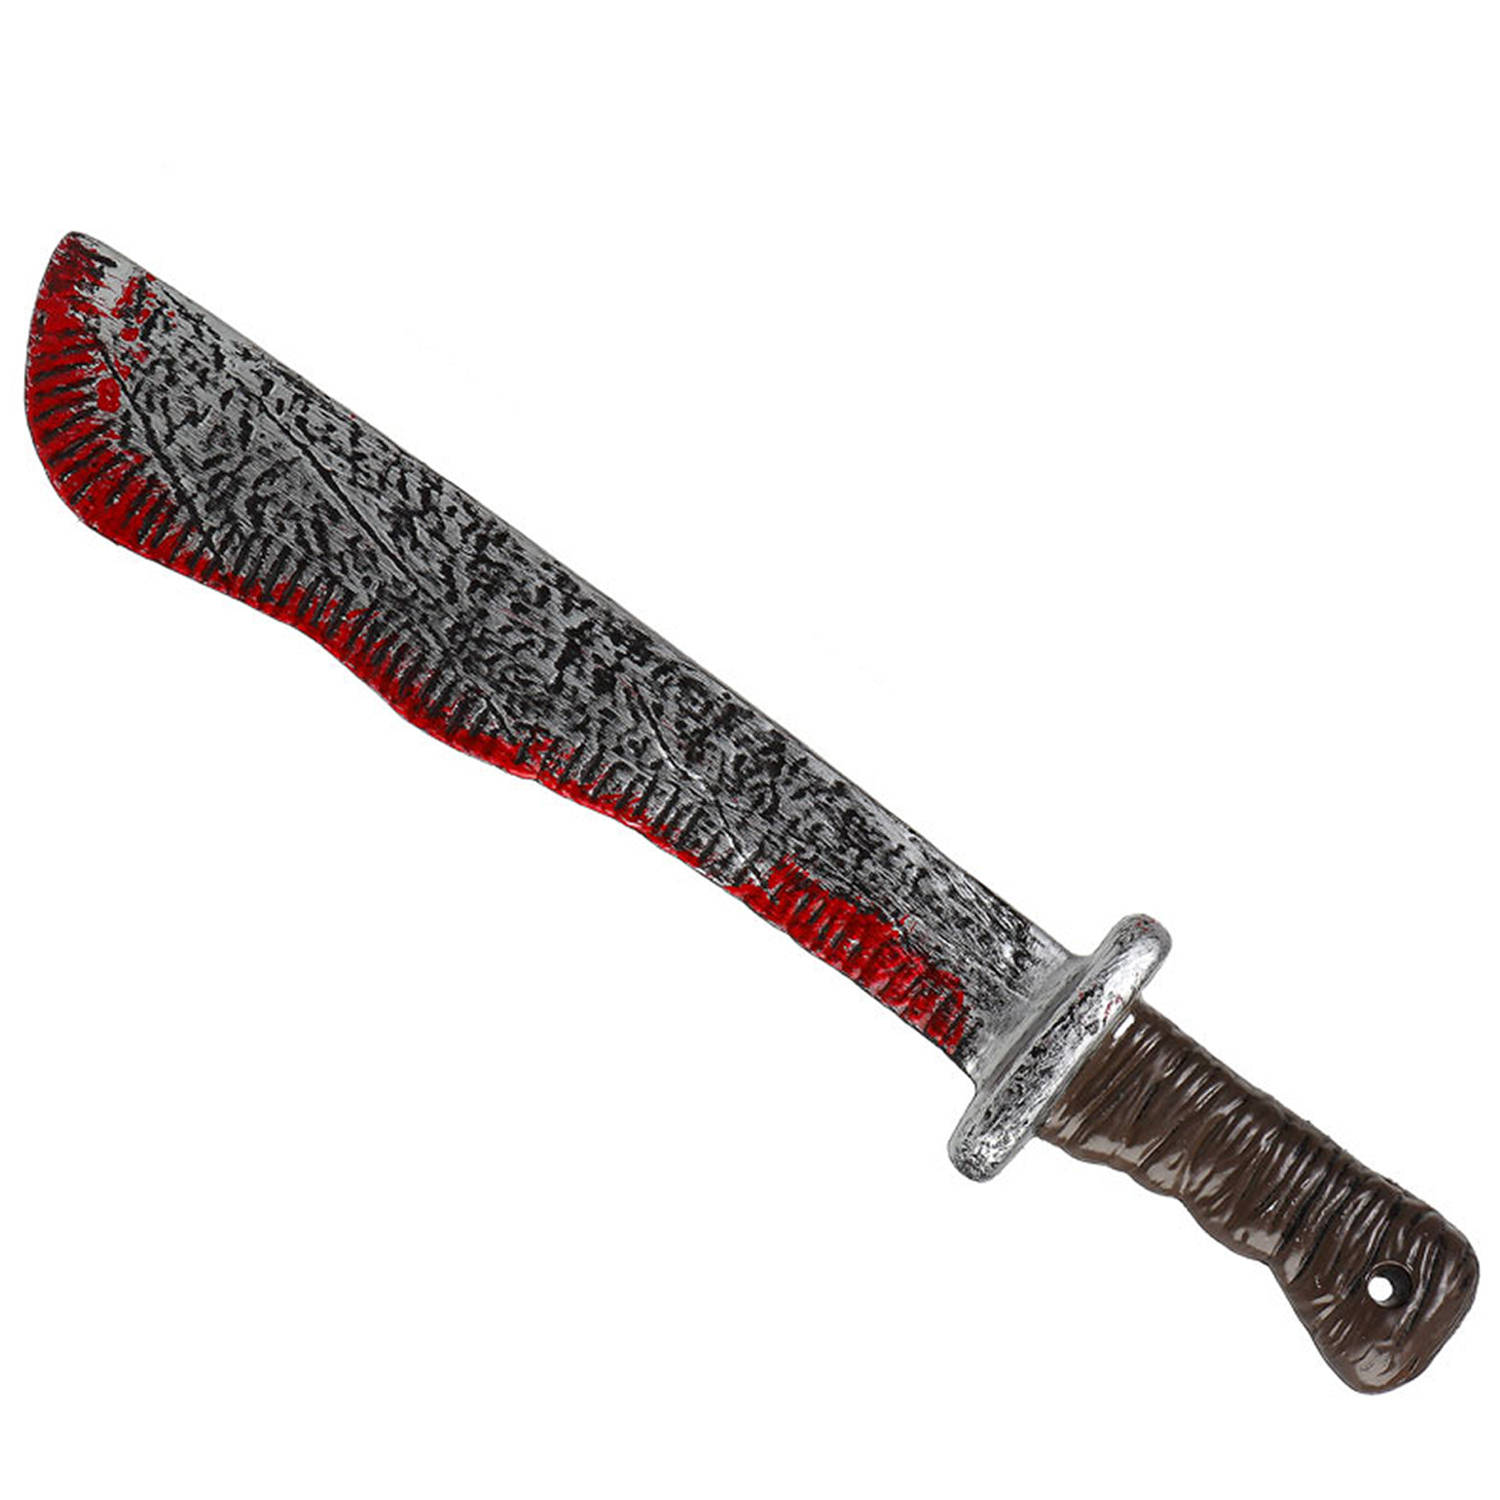 Grote machete/mes - plastic - 43 cm - Halloween/ridders/zombie killer verkleed wapens - met bloed